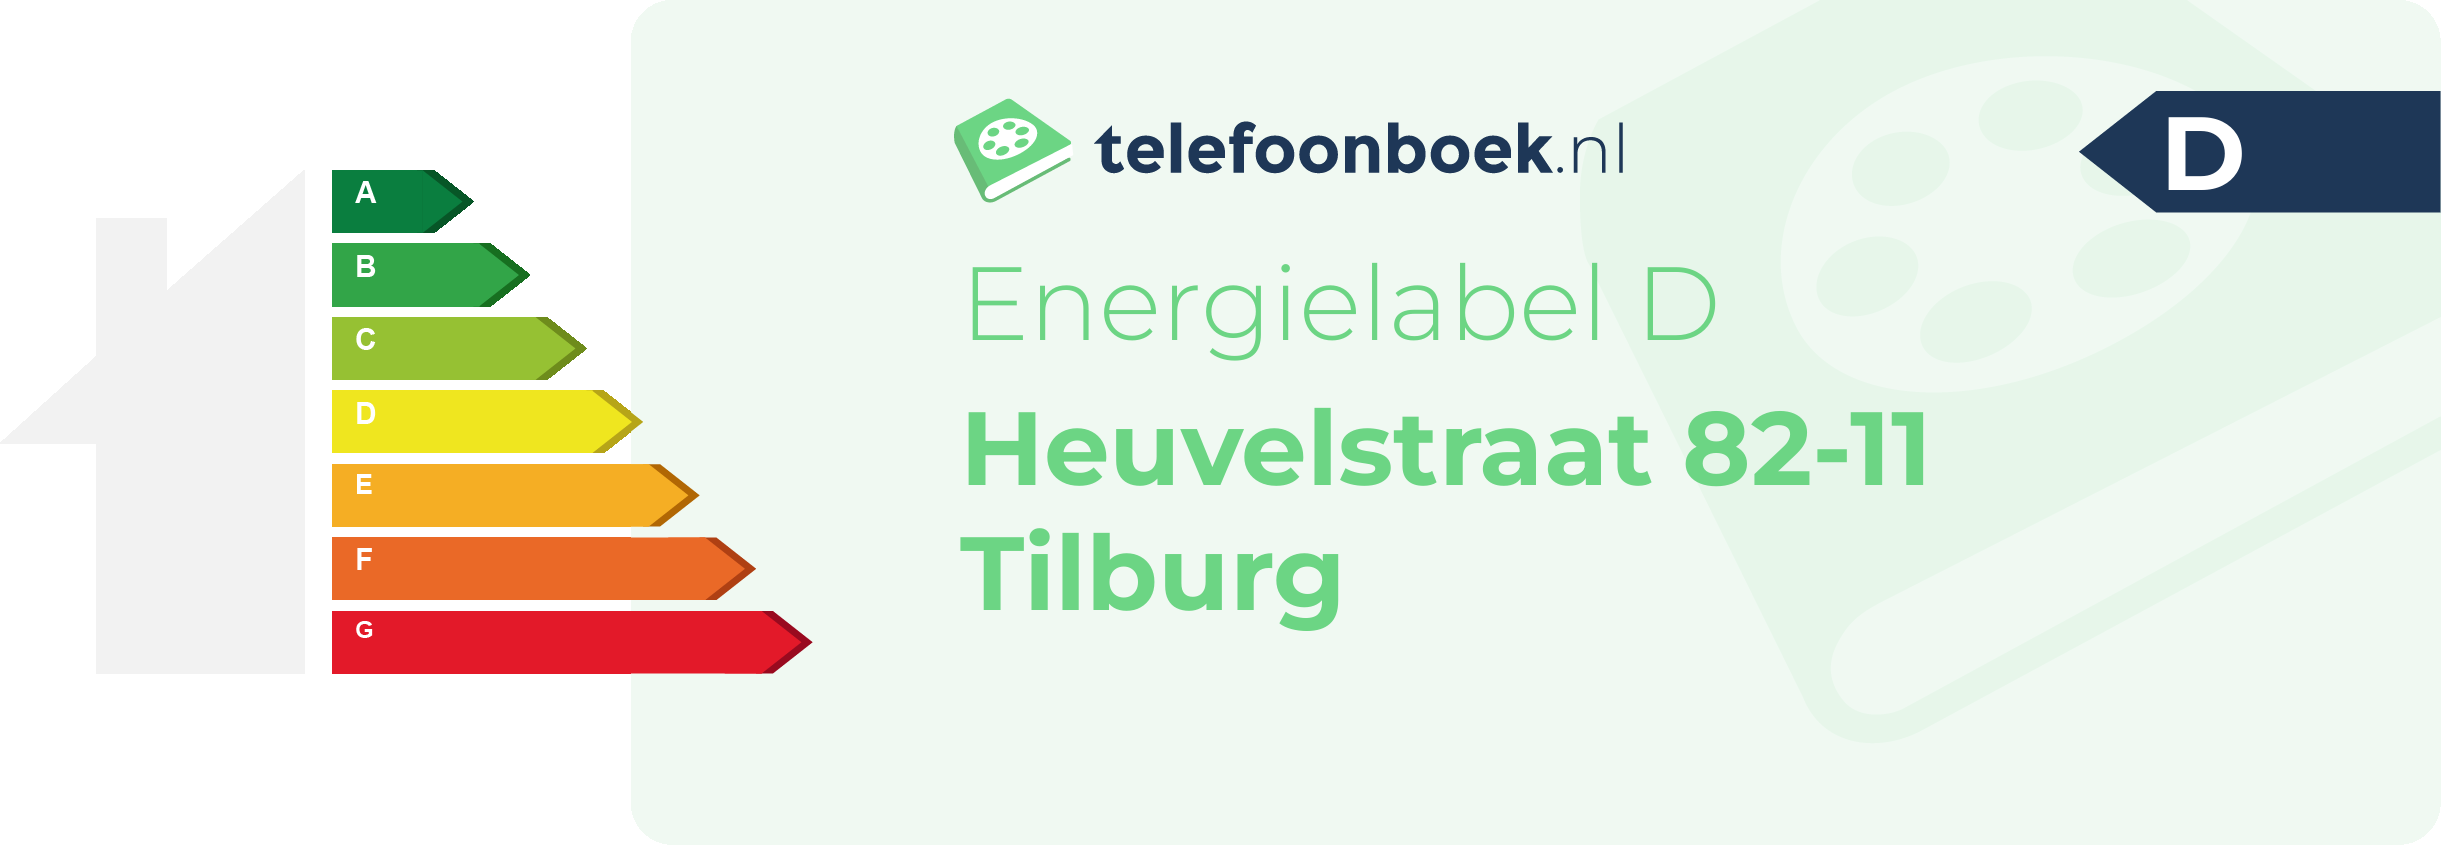 Energielabel Heuvelstraat 82-11 Tilburg